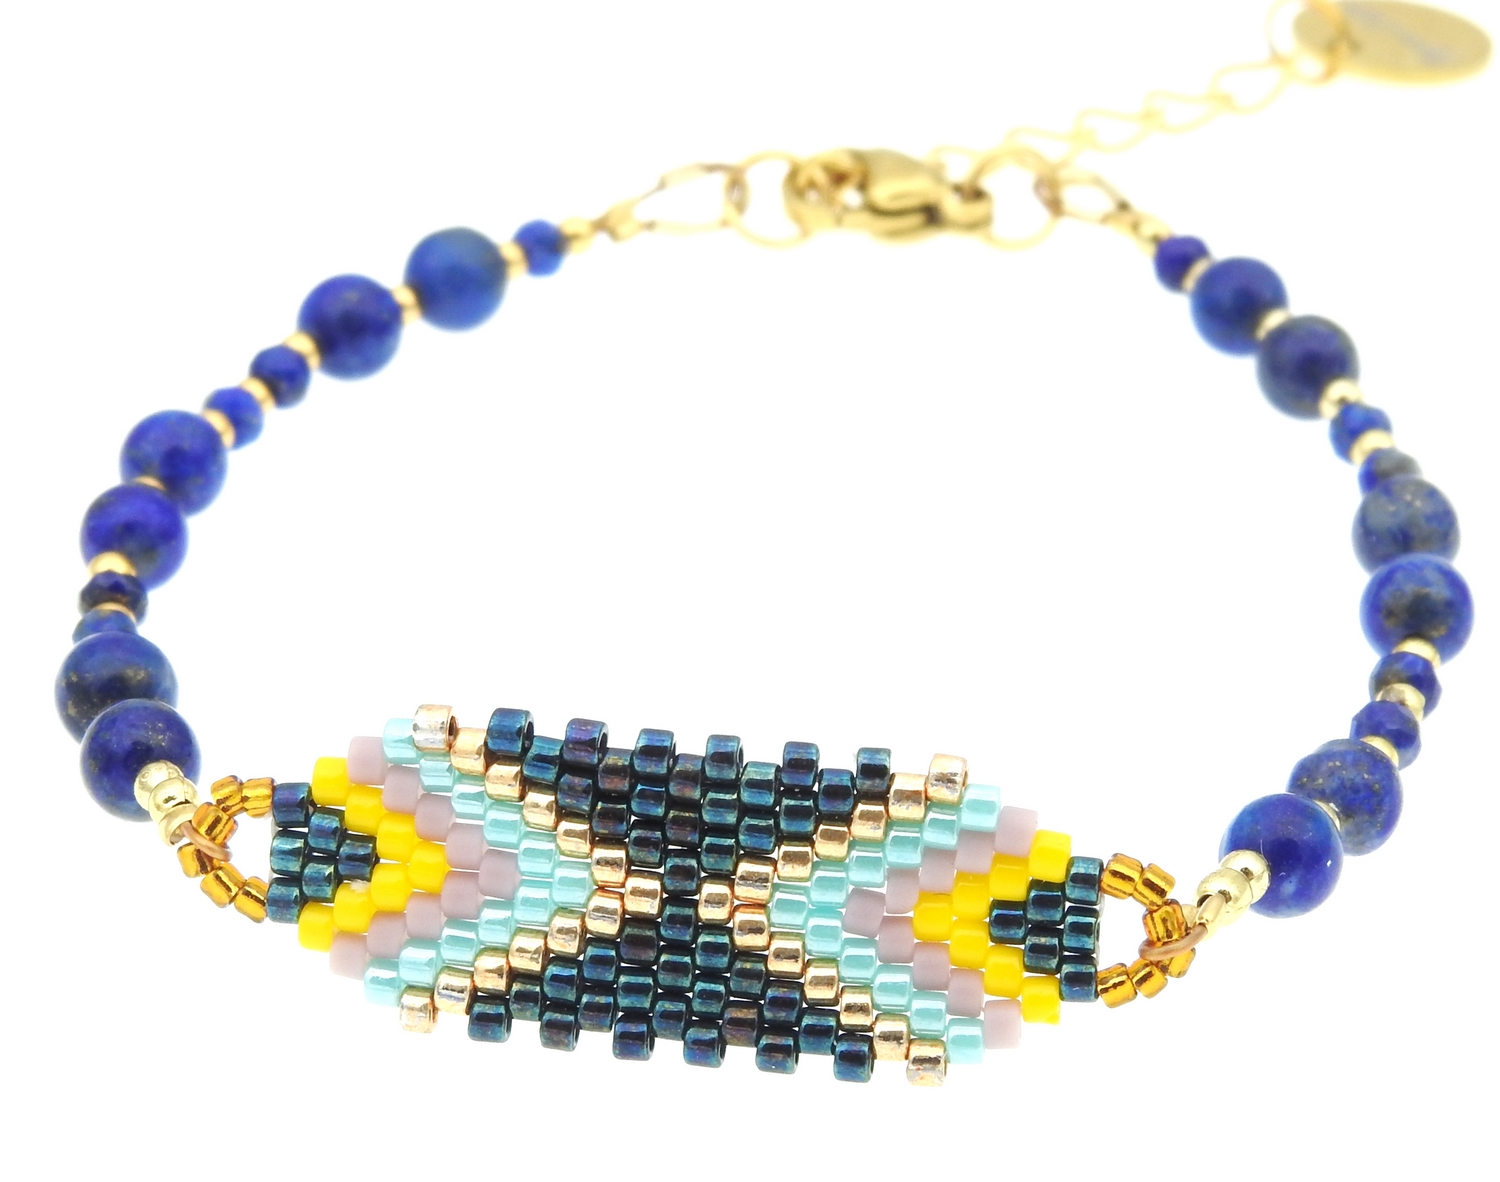 Bracelet original avec intercalaire et pierres fines en lapis-lazuli MMC104 SALVA 4